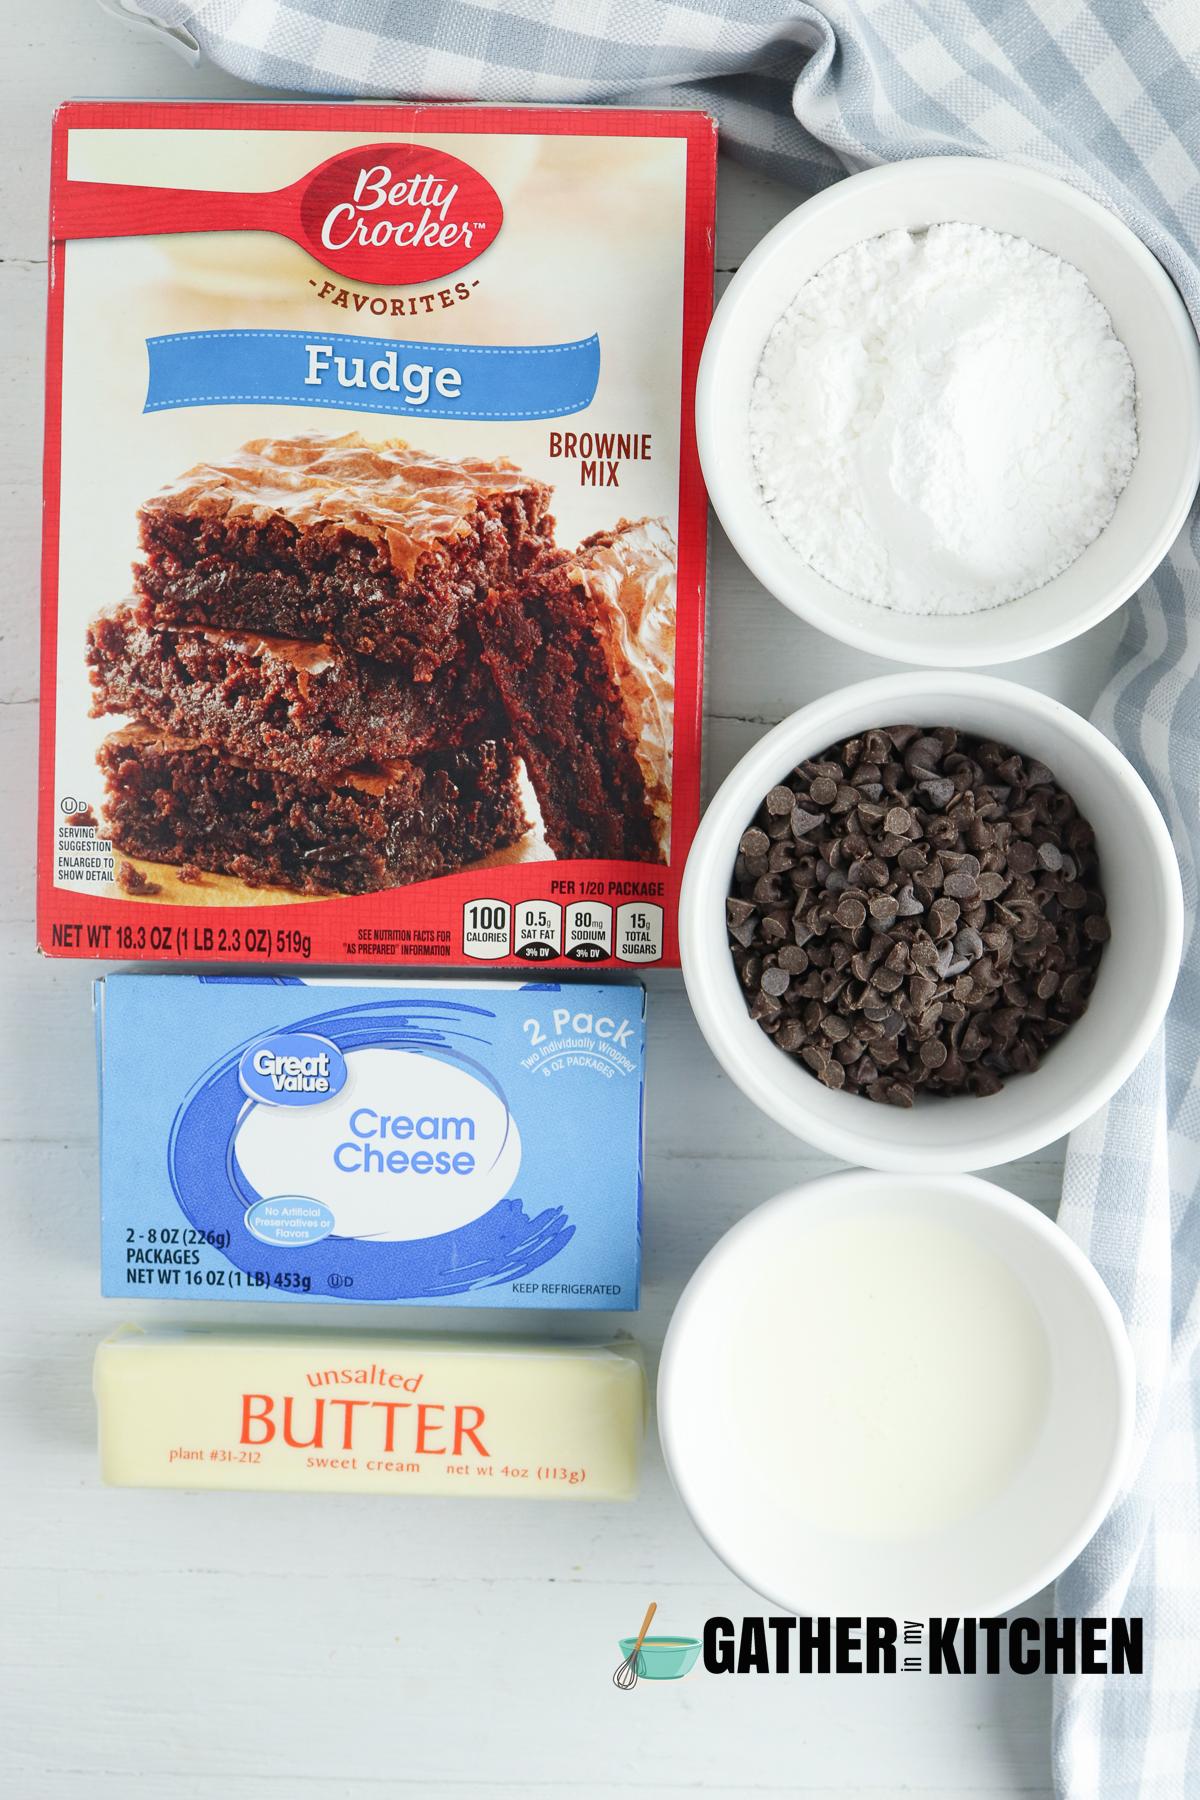 Ingredients: powdered sugar, mini chocolate chips, milk, butter, cream cheese, 
 and fudge brownie mix.